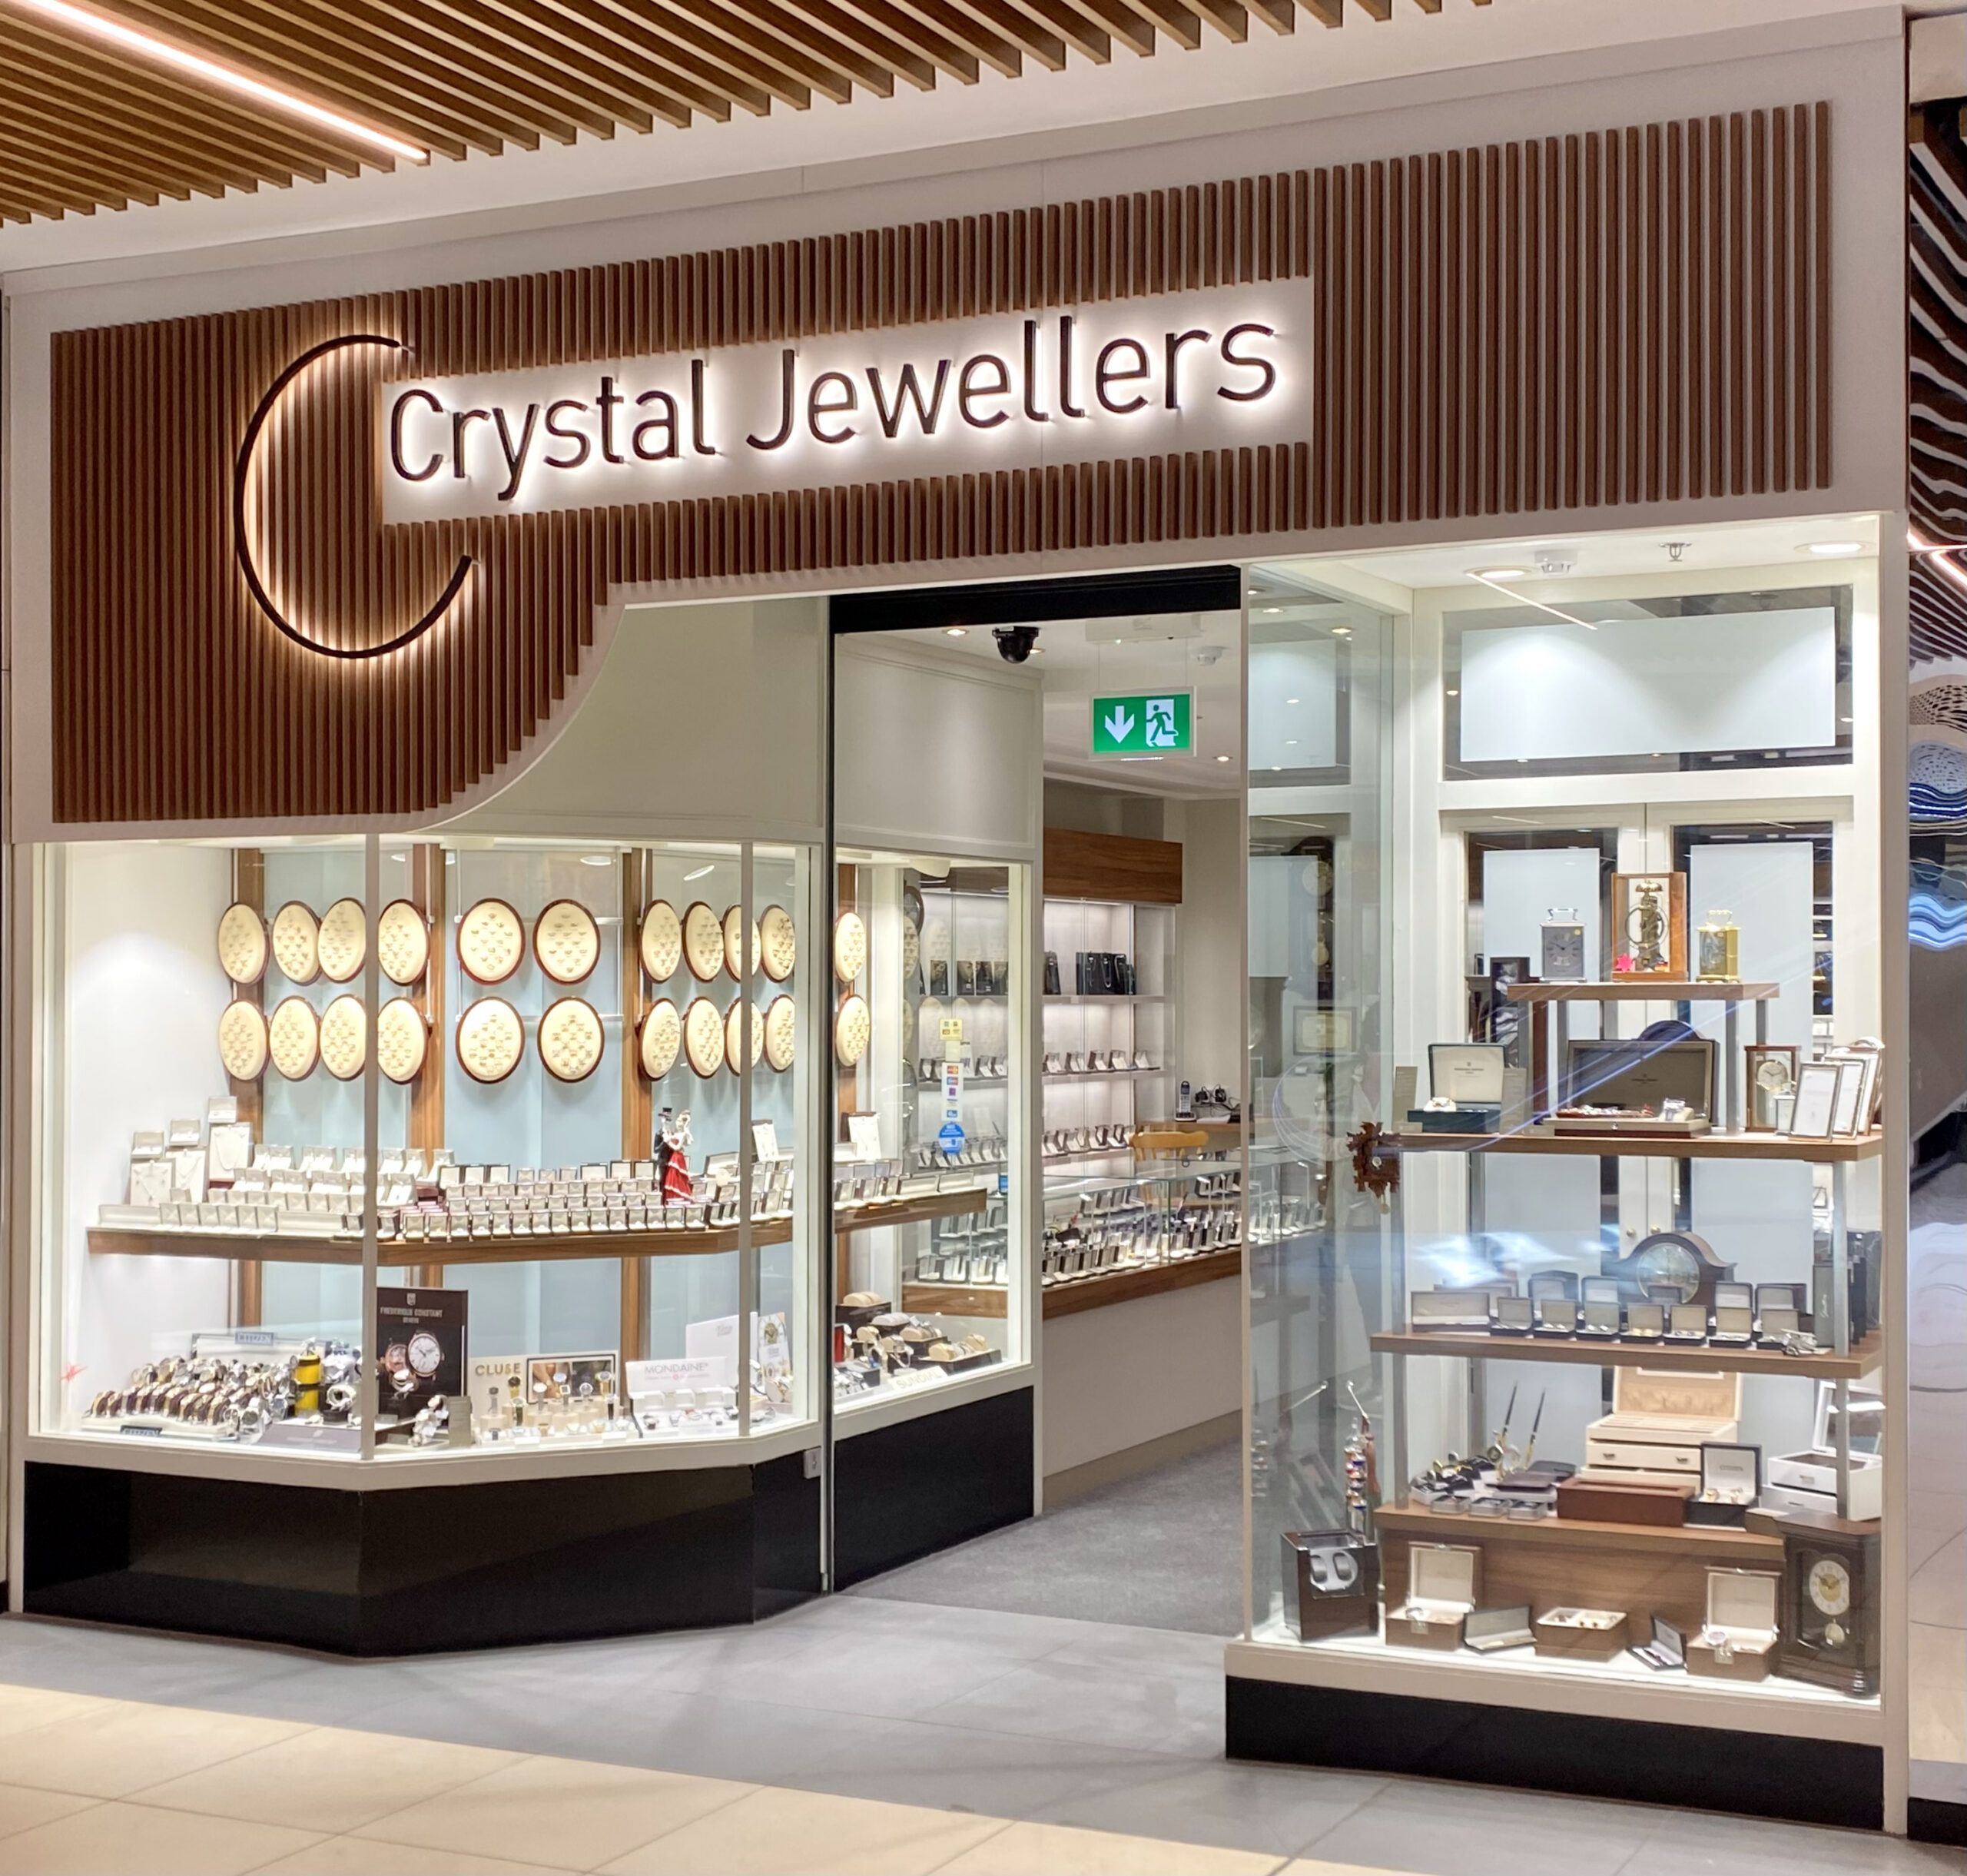 Crystal Jewellers Shopfront Balnchardstown Shopping Centre